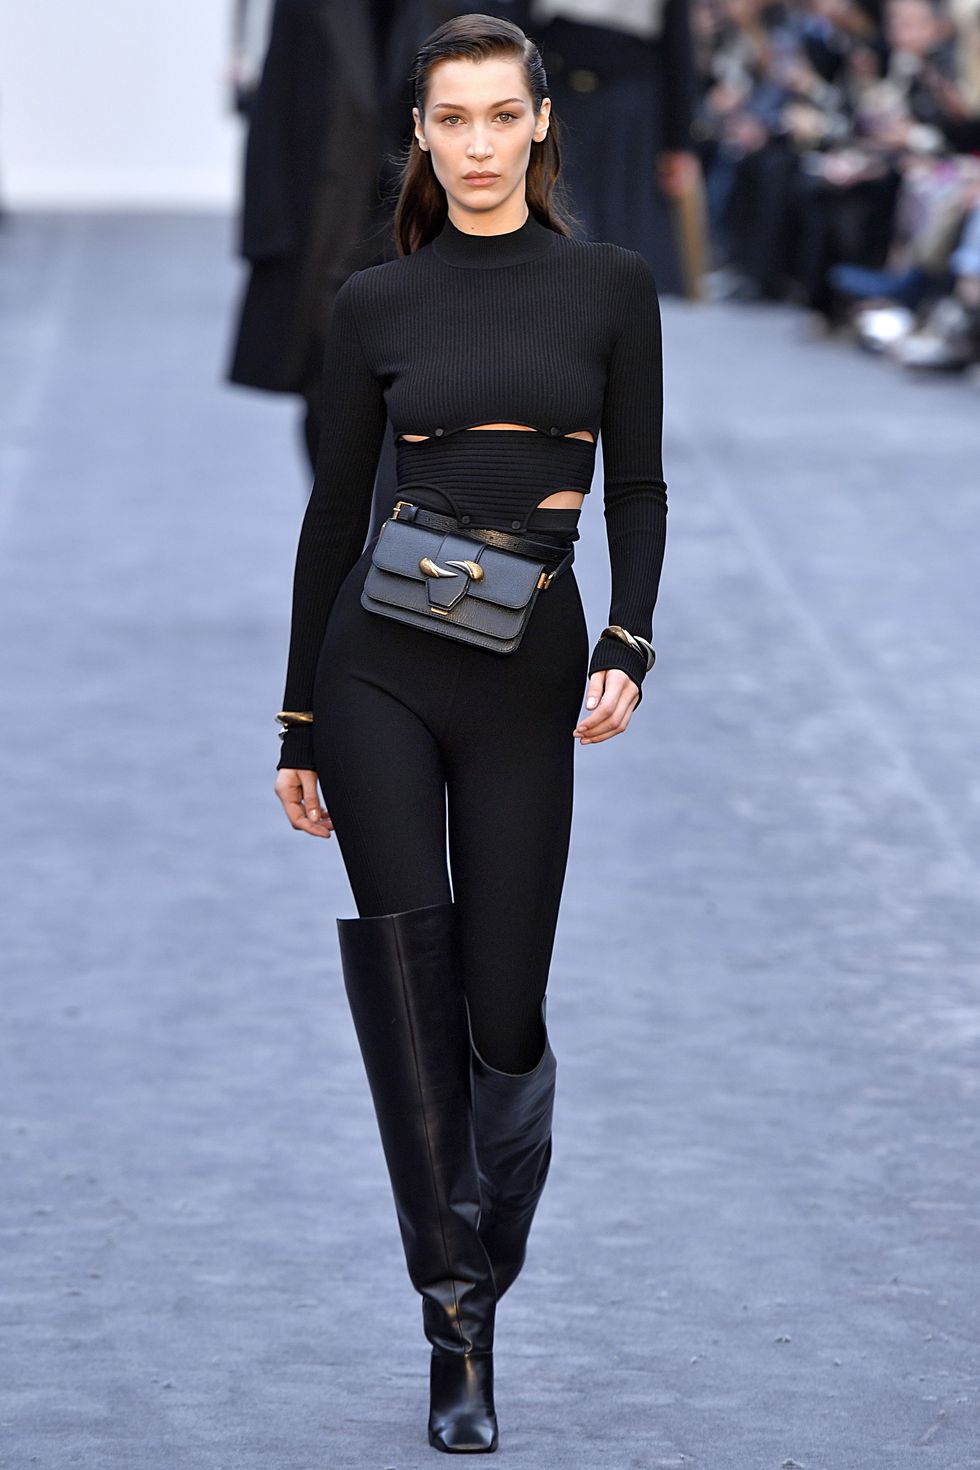 trendy belt bag fashion